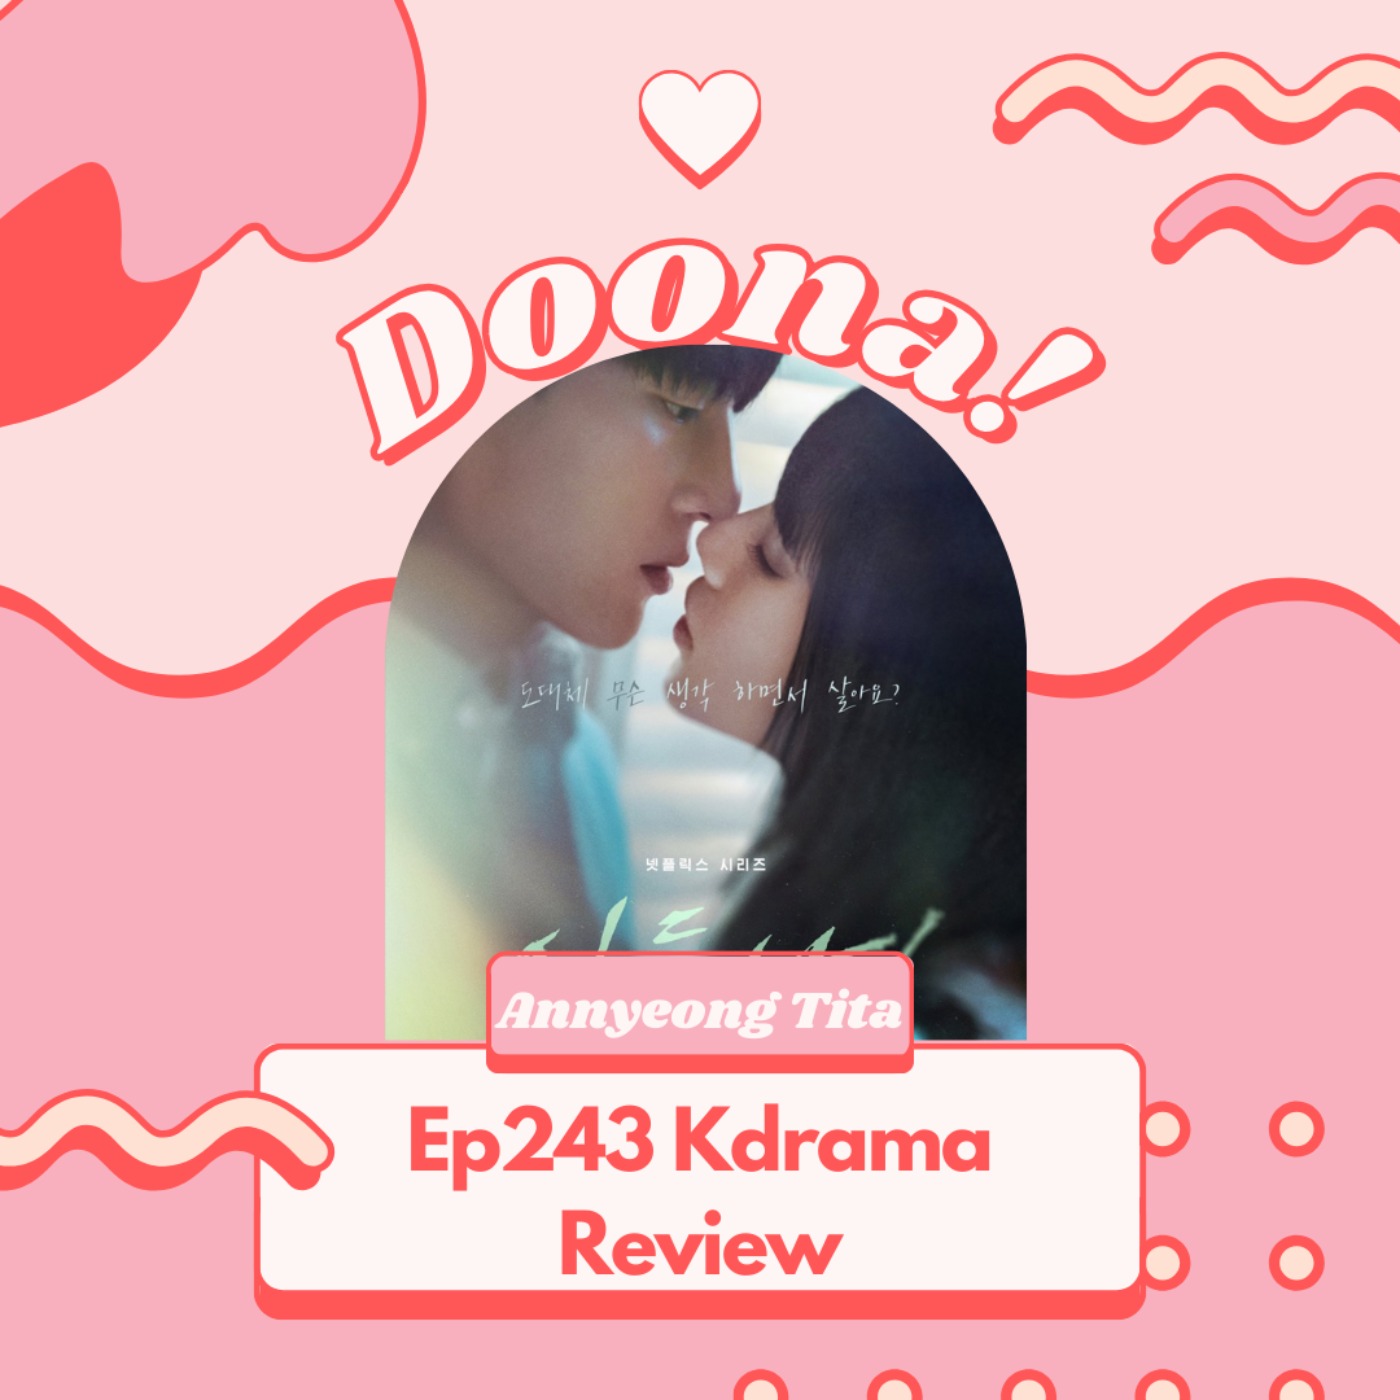 Ep243 KDrama Review: Doona!